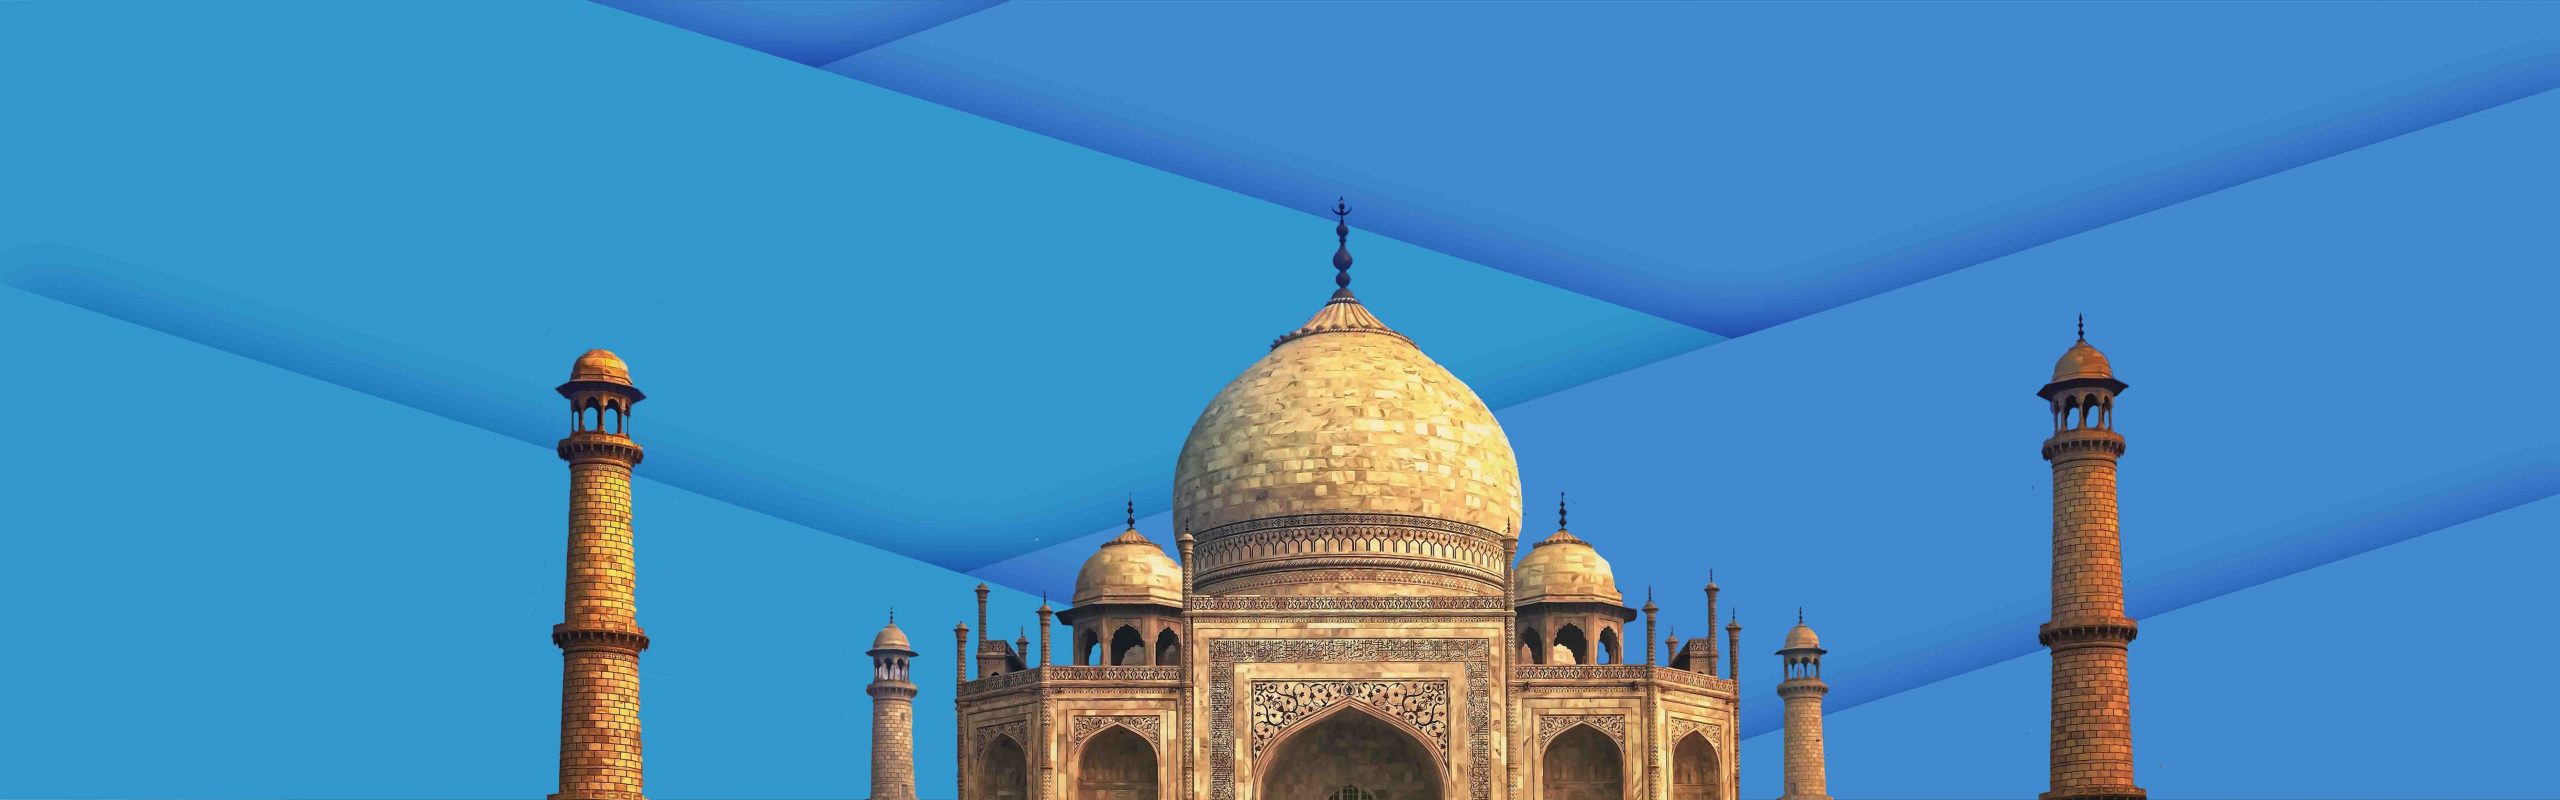 Cyber Chasse- Taj Mahal